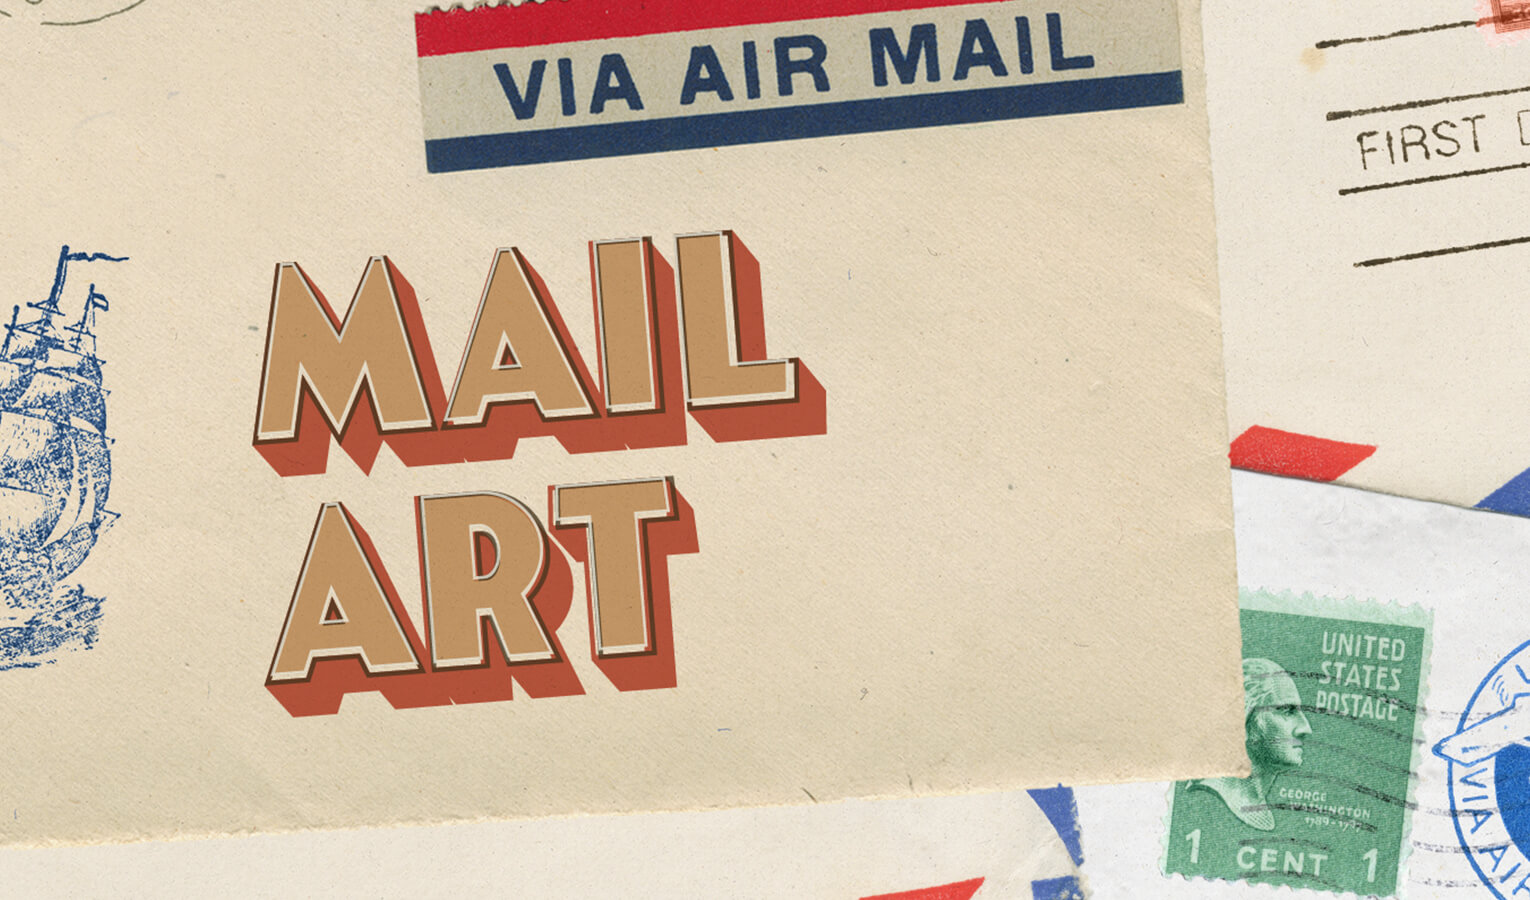 Vintage Assorted Mini Envelopes